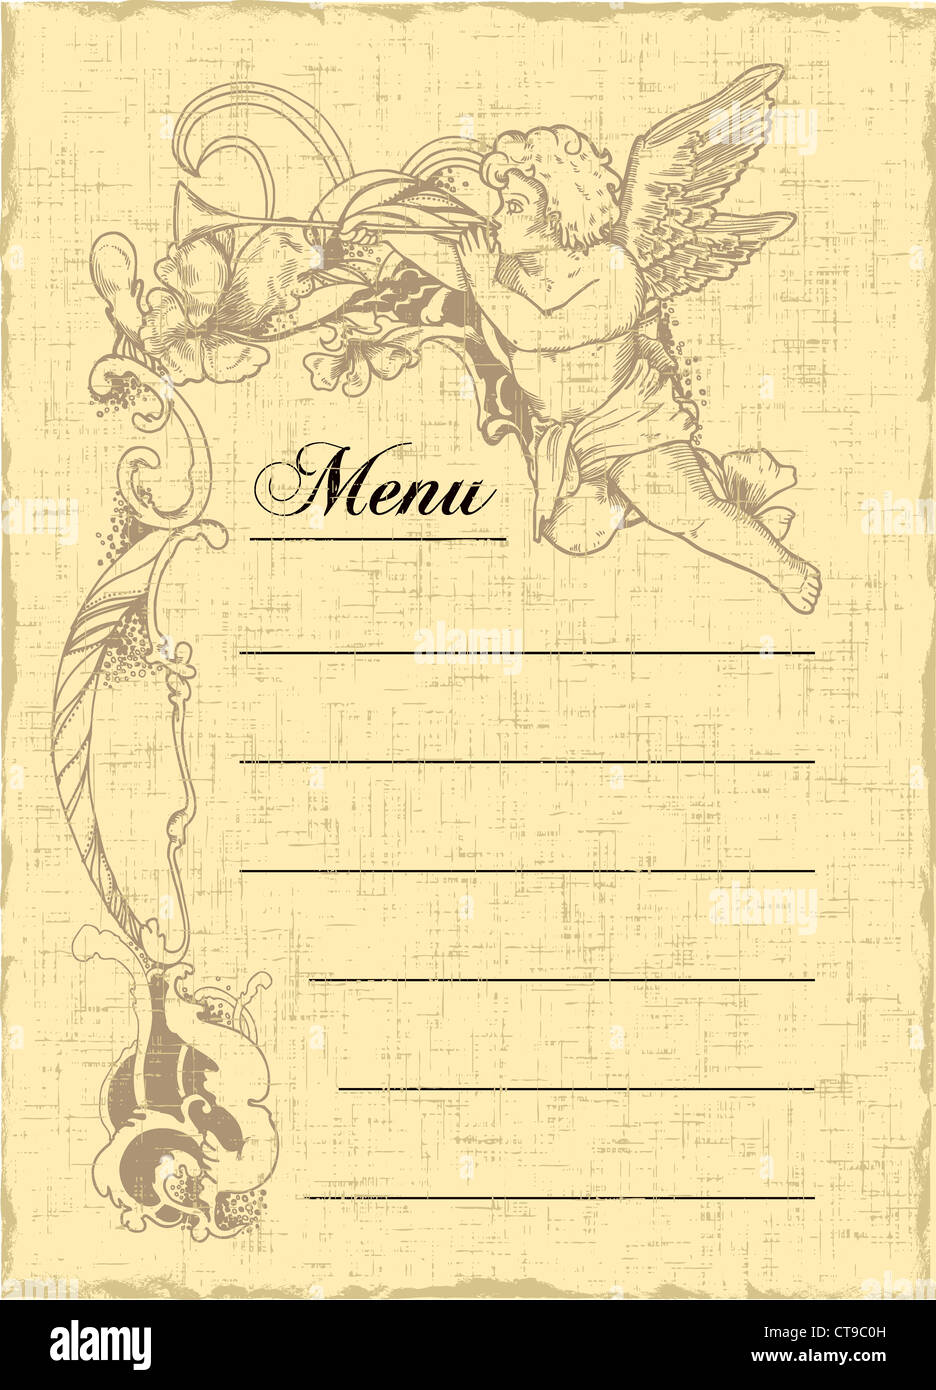 vector vintage restaurant menu Stock Photo